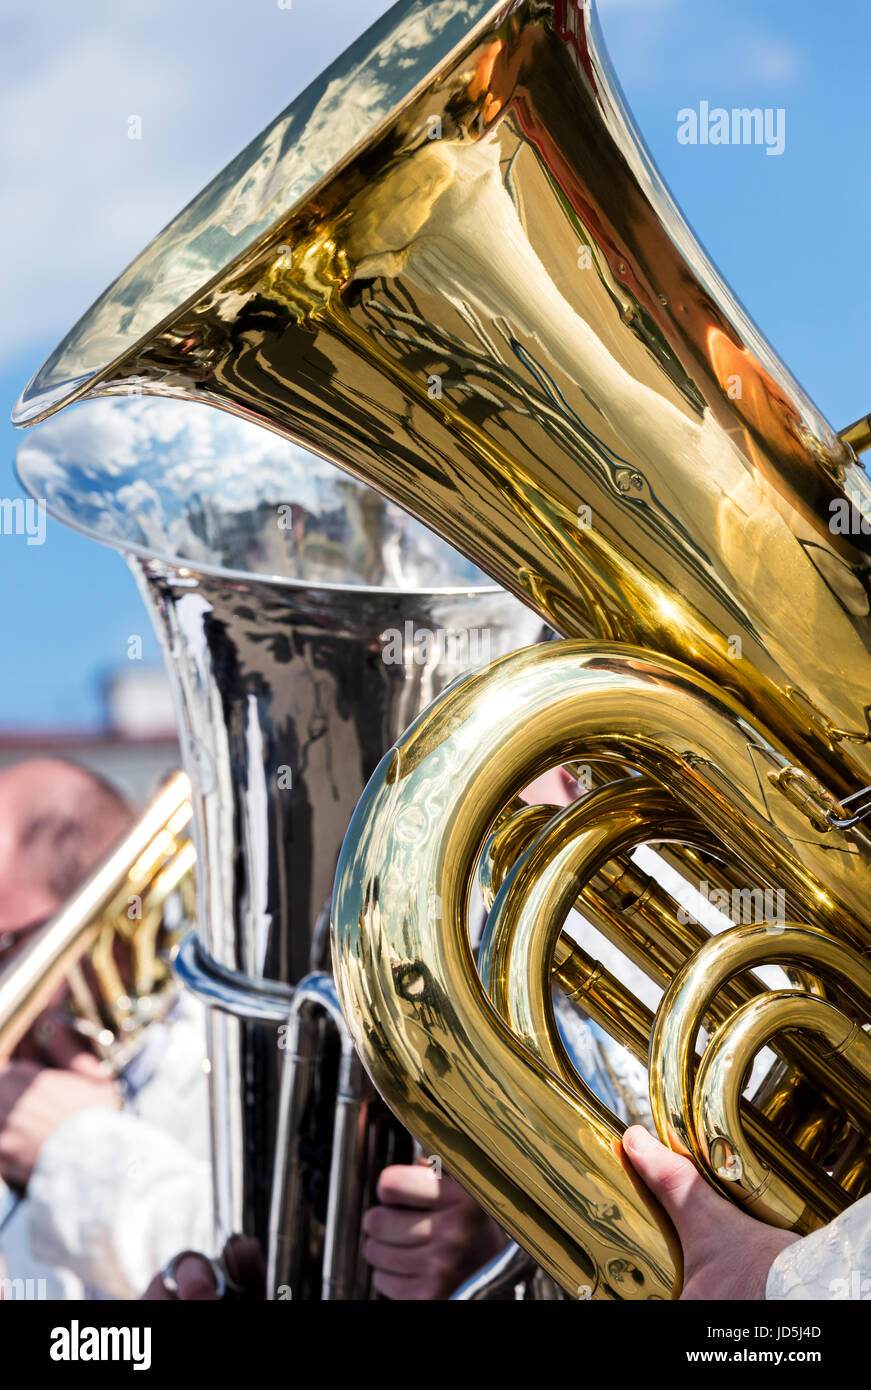 Big Brass Tuba High Resolution Stock Photography and Images - Alamy